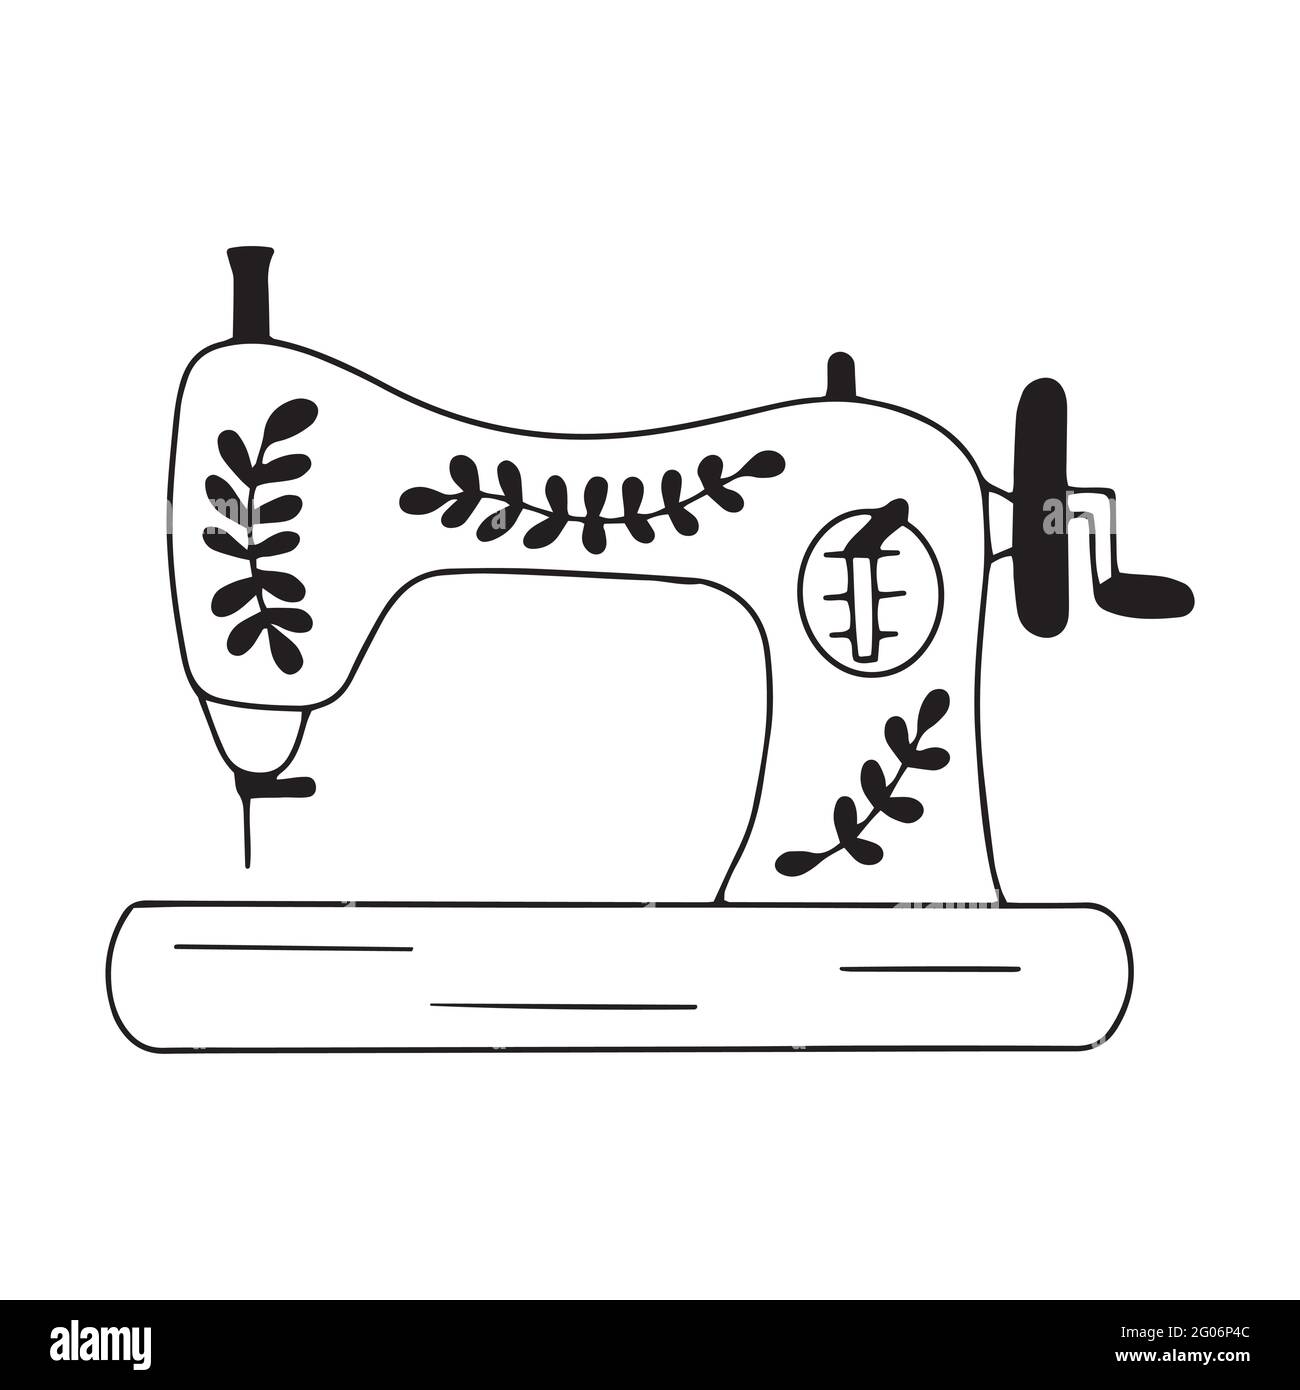 Sewing Machine Vector Art & Graphics